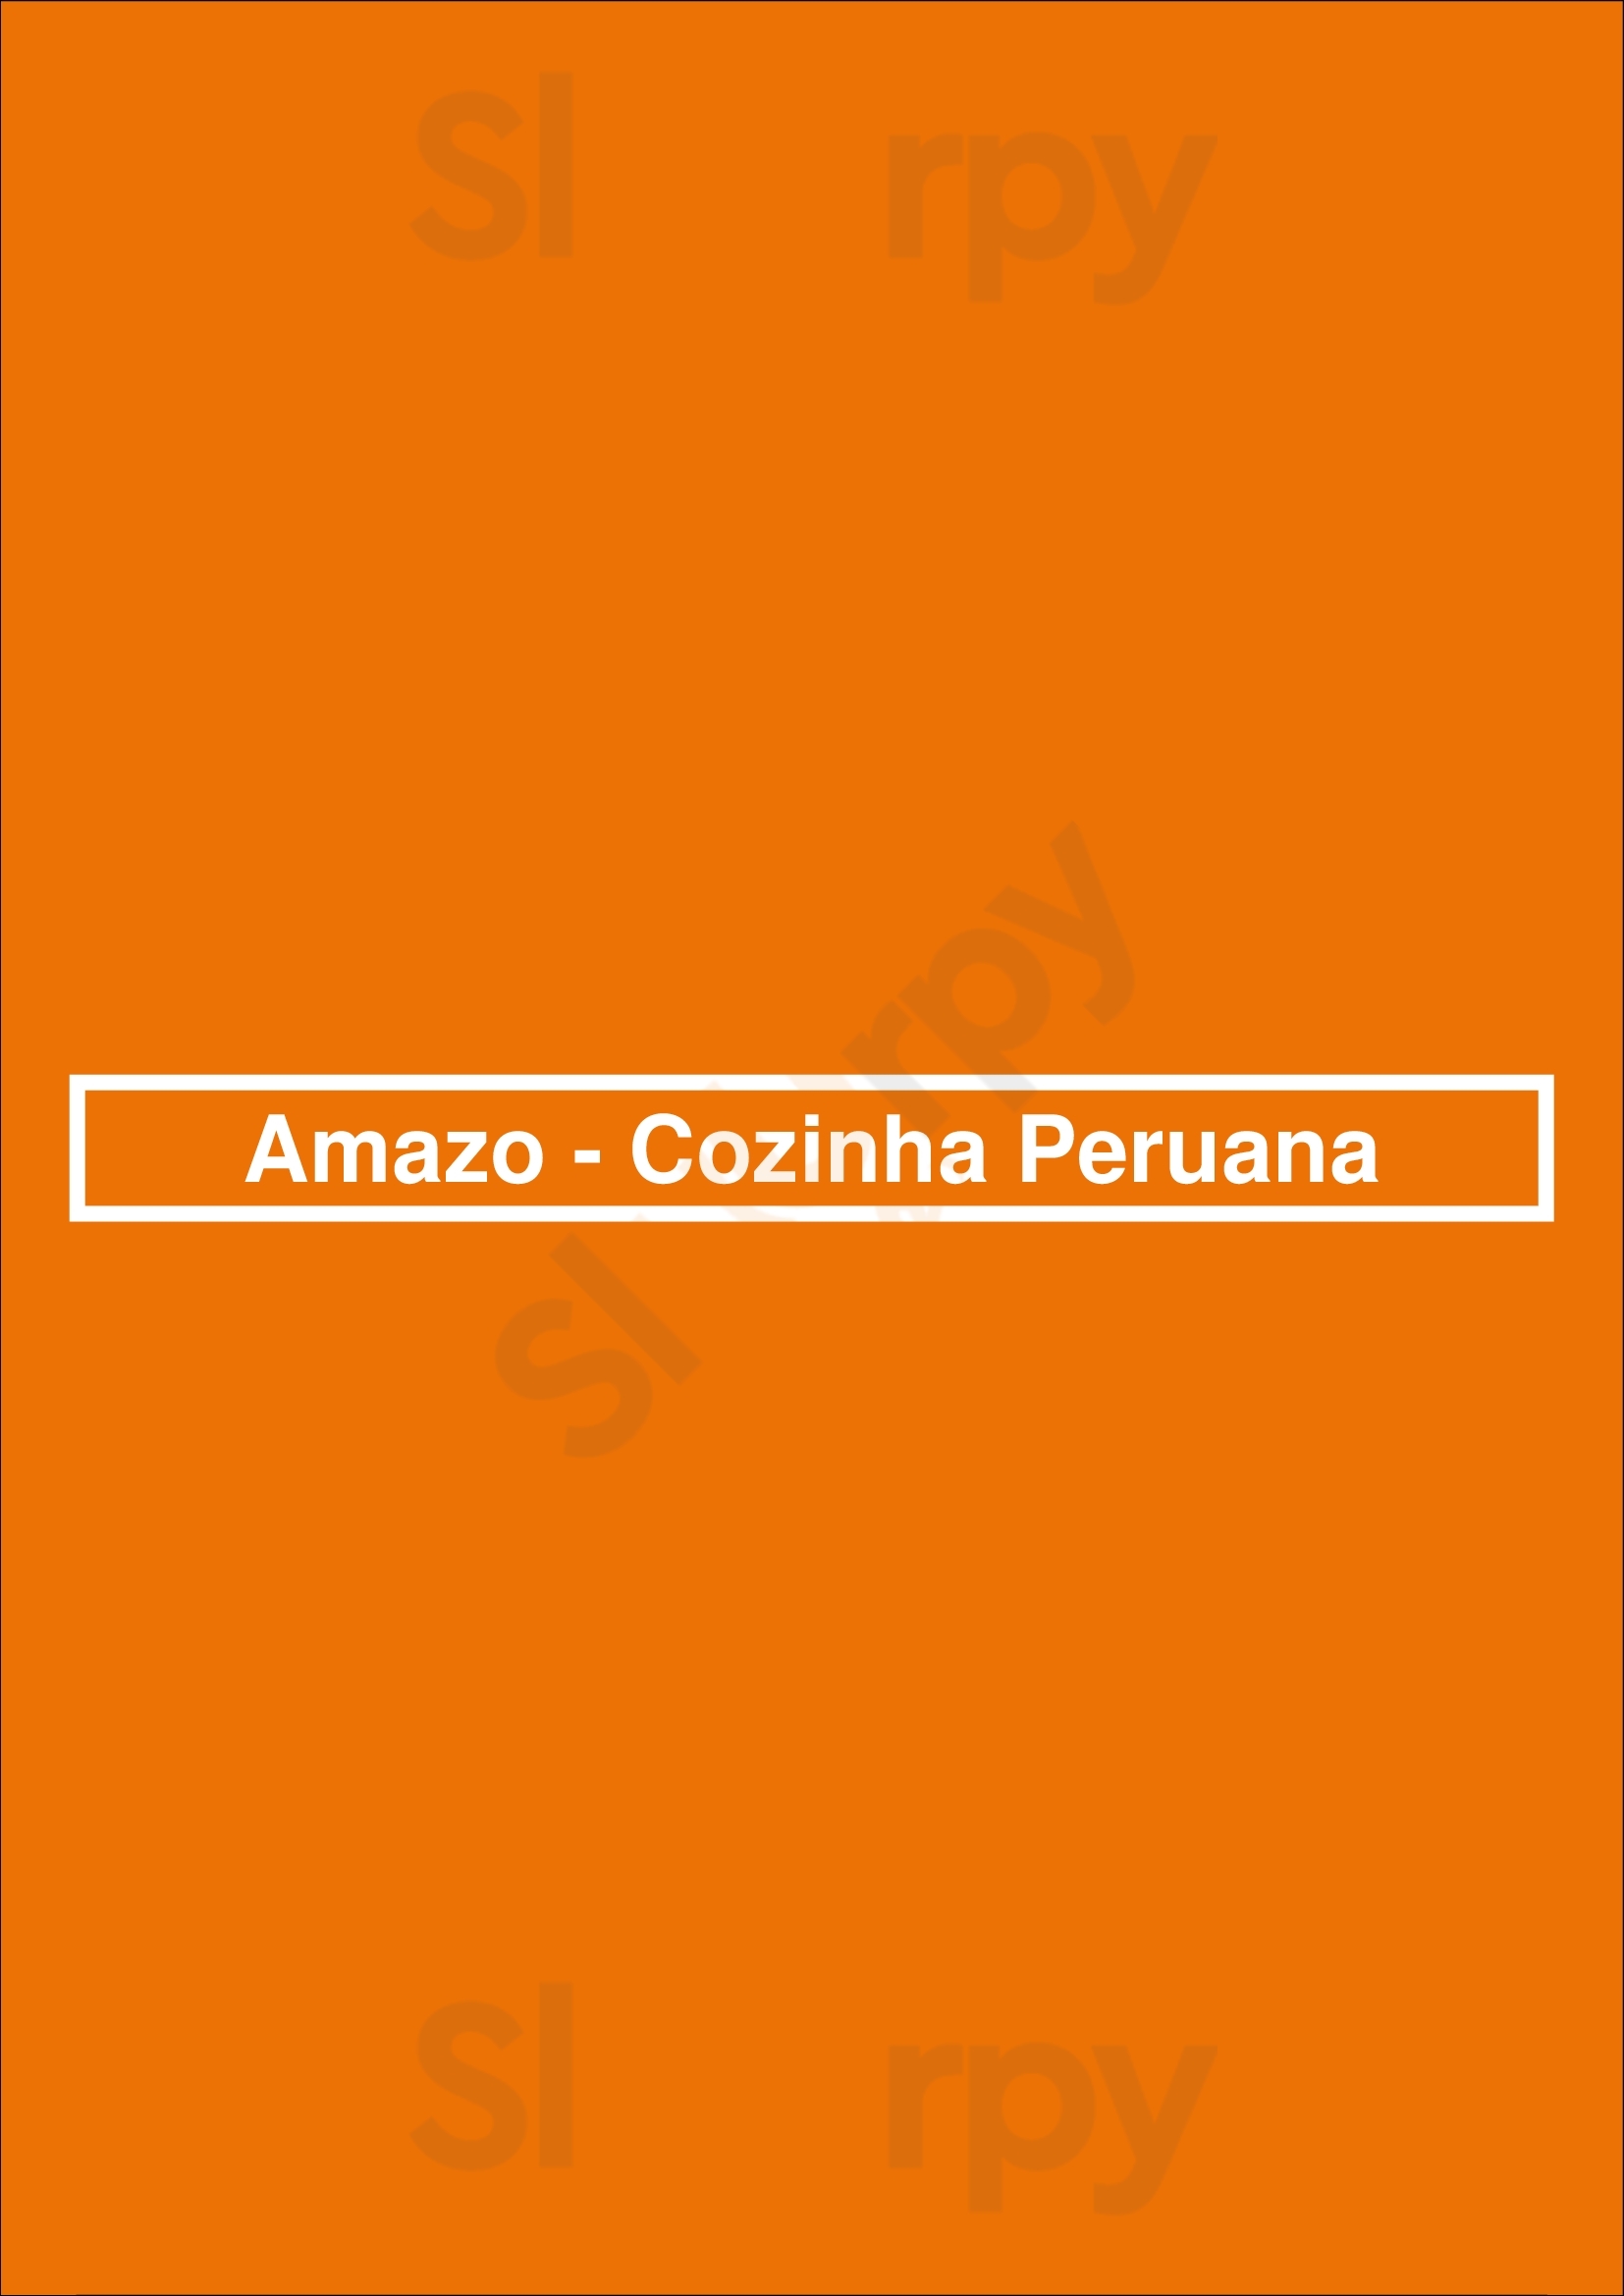 Amazo - Cozinha Peruana São Paulo Menu - 1